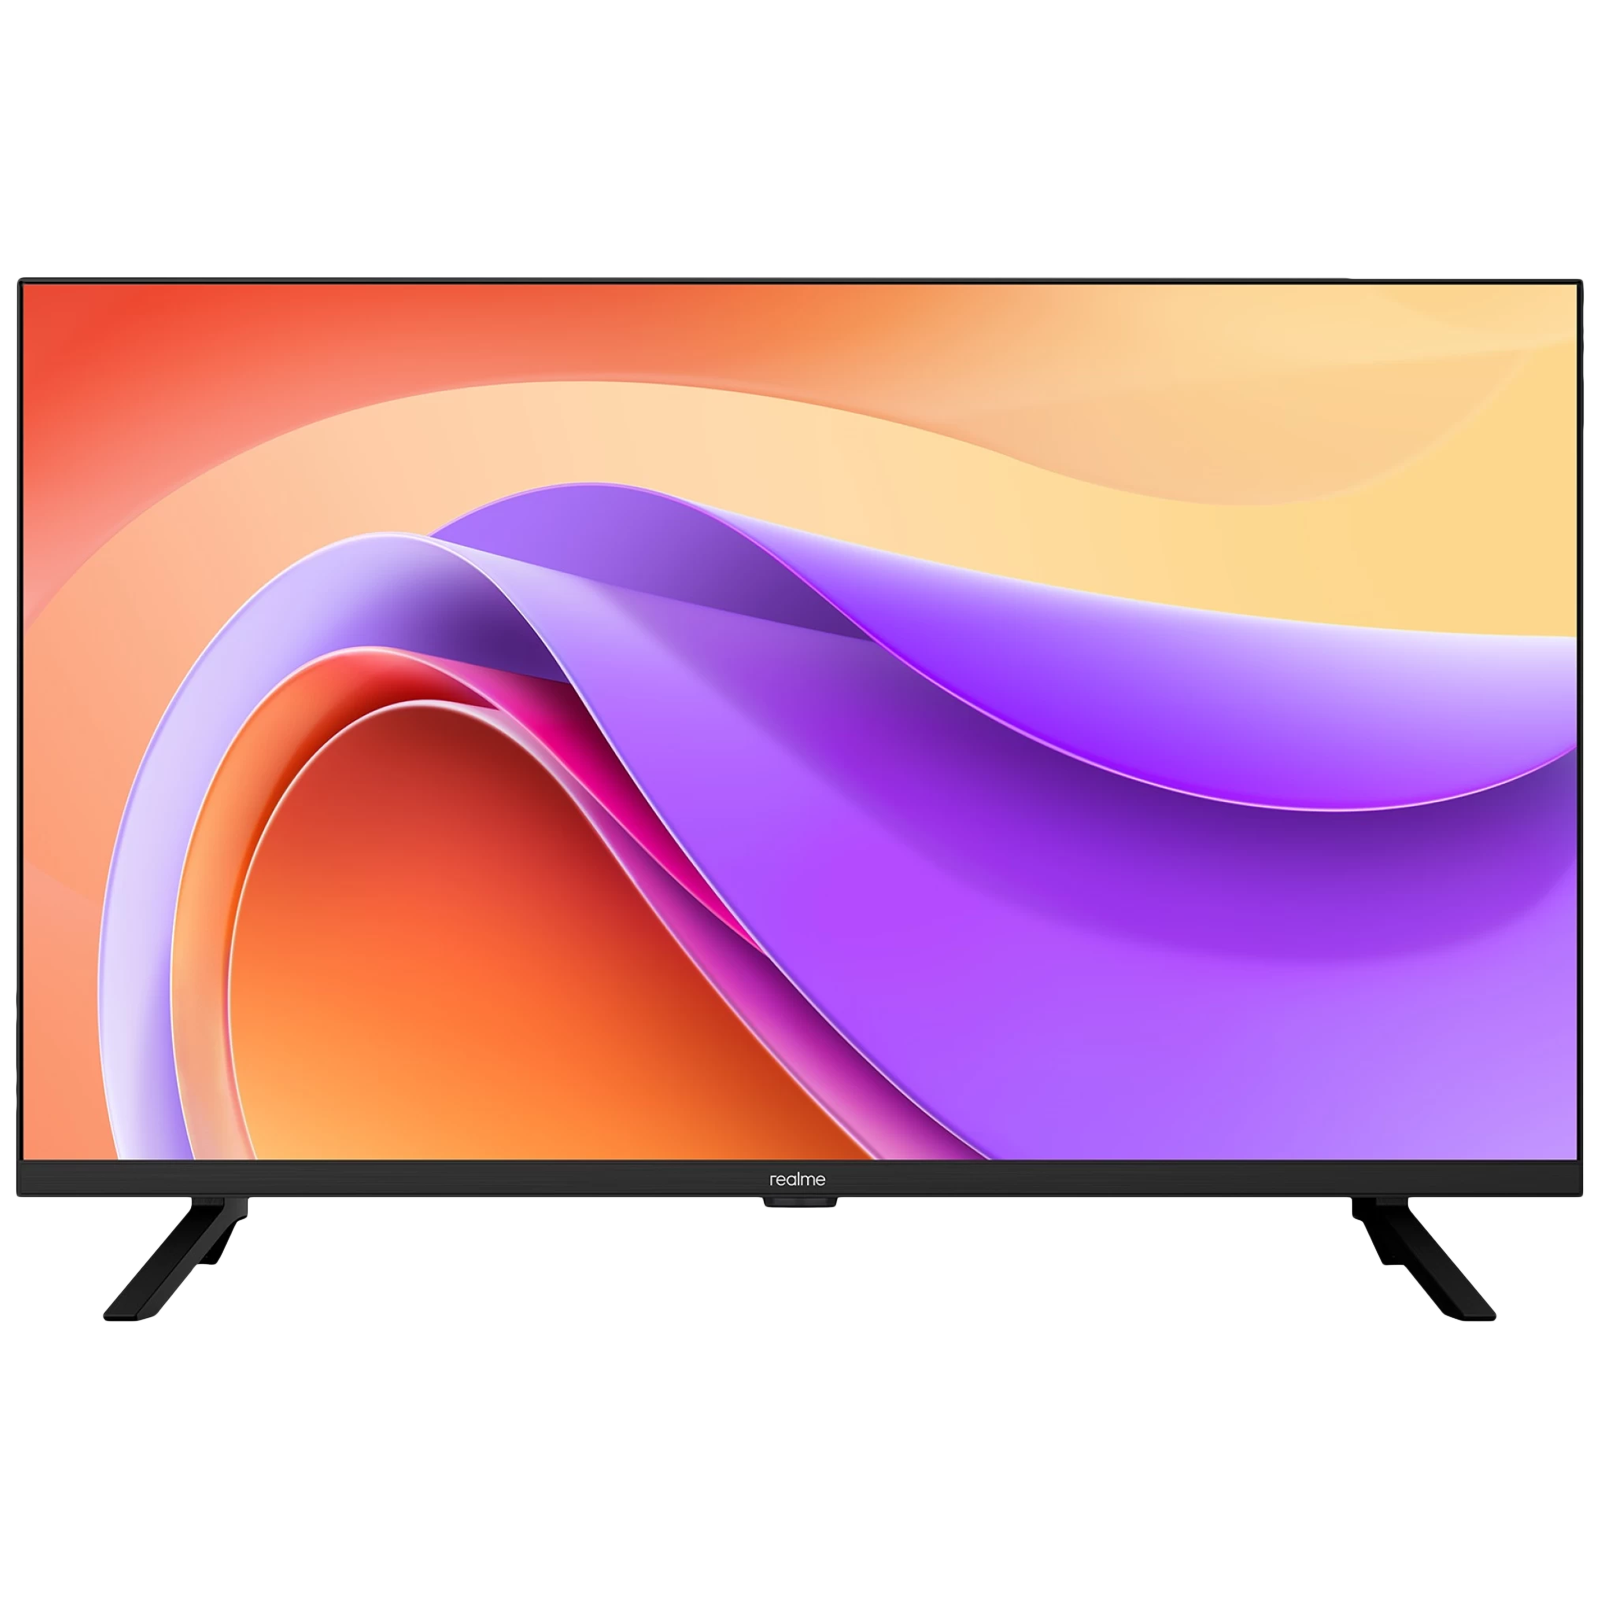 realme RMV2205 80 cm (32 inch) HD Ready TV with Bezel Less Display (2023 model)